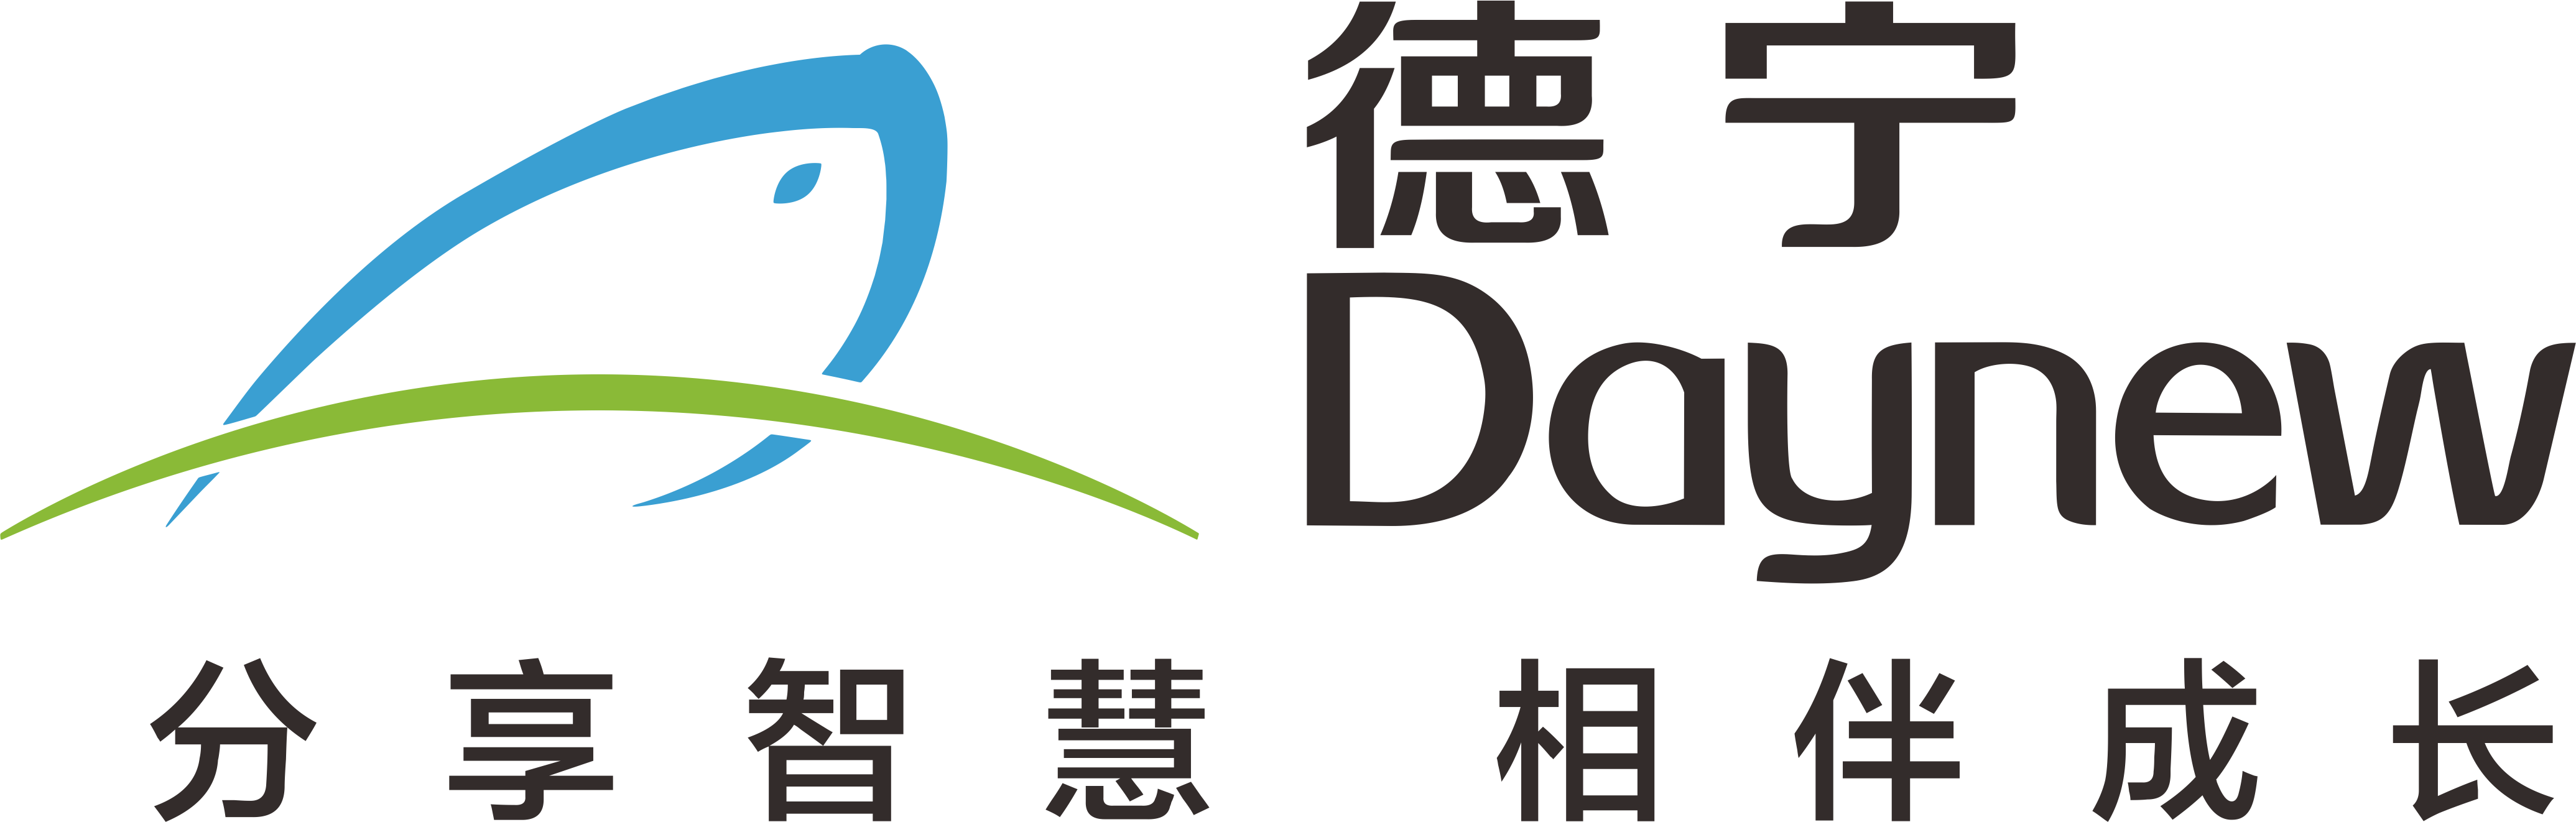 德宁中文logo横向PNG20170330.png